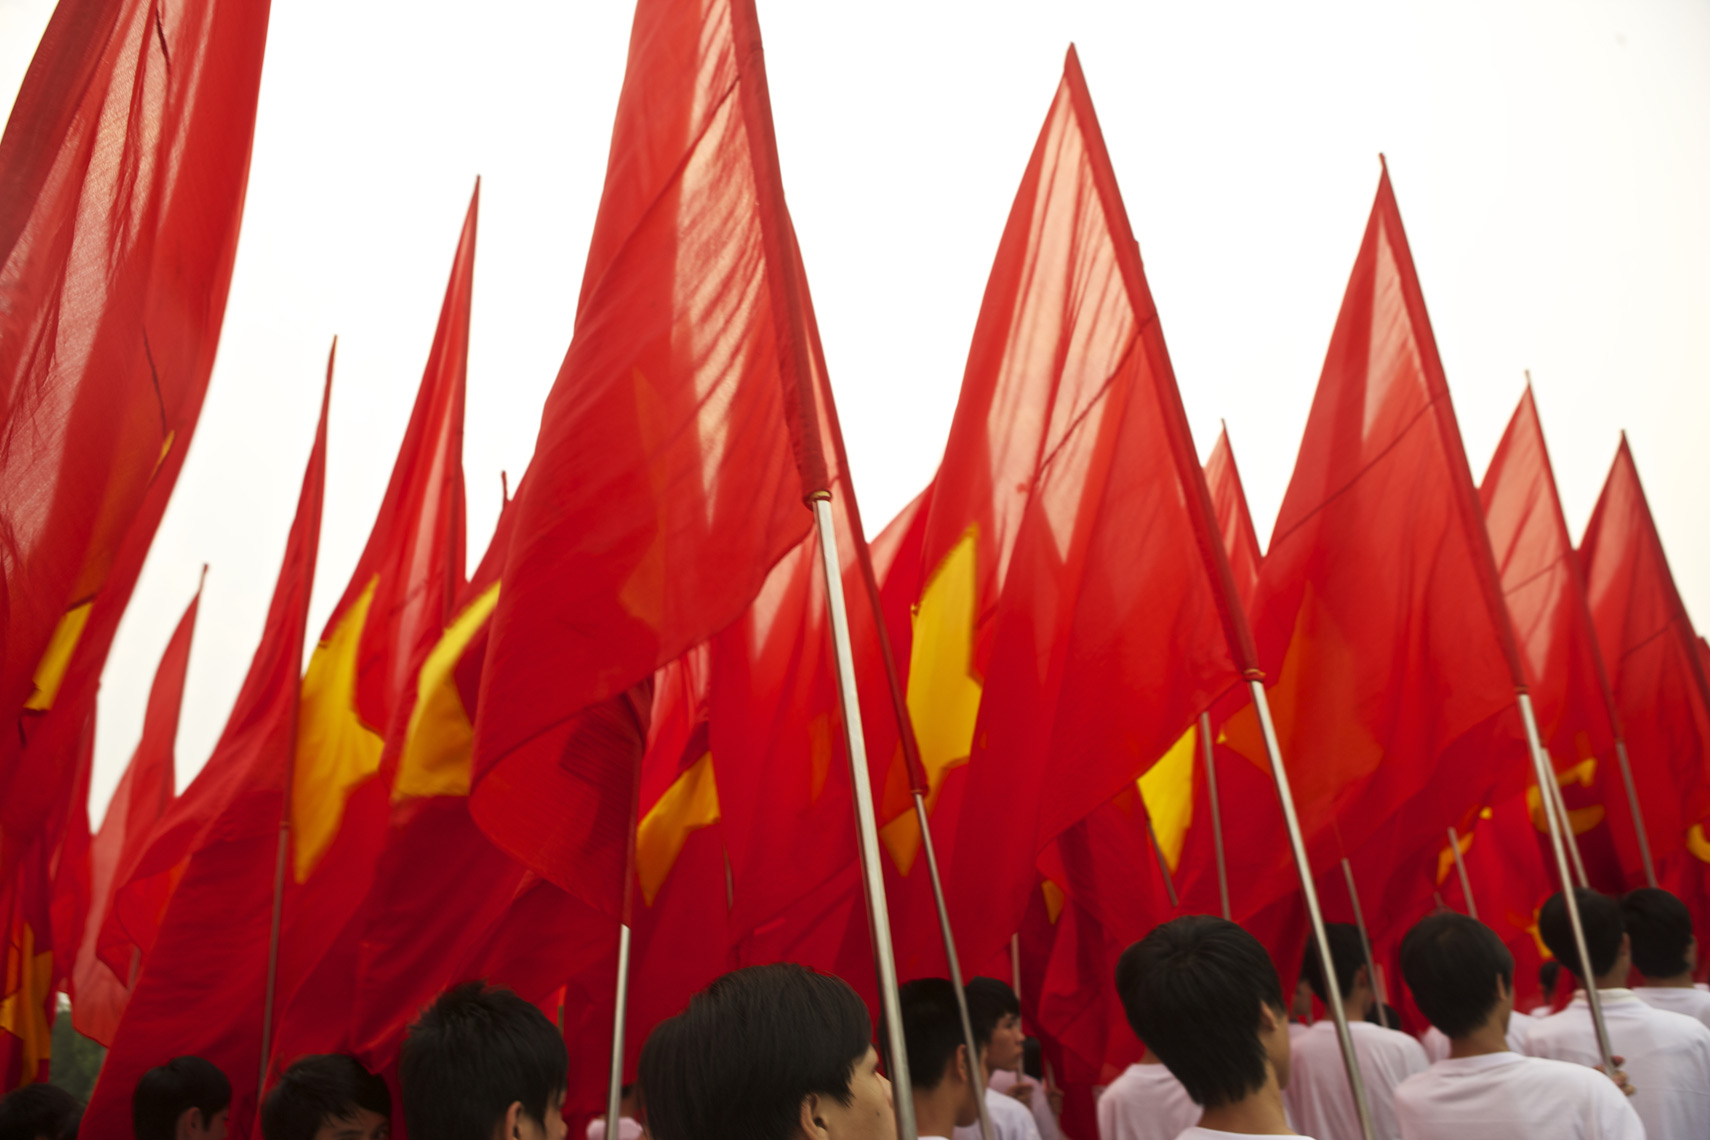 Vietnamese Flags Fly in Celebraton/Steve Mason Photography